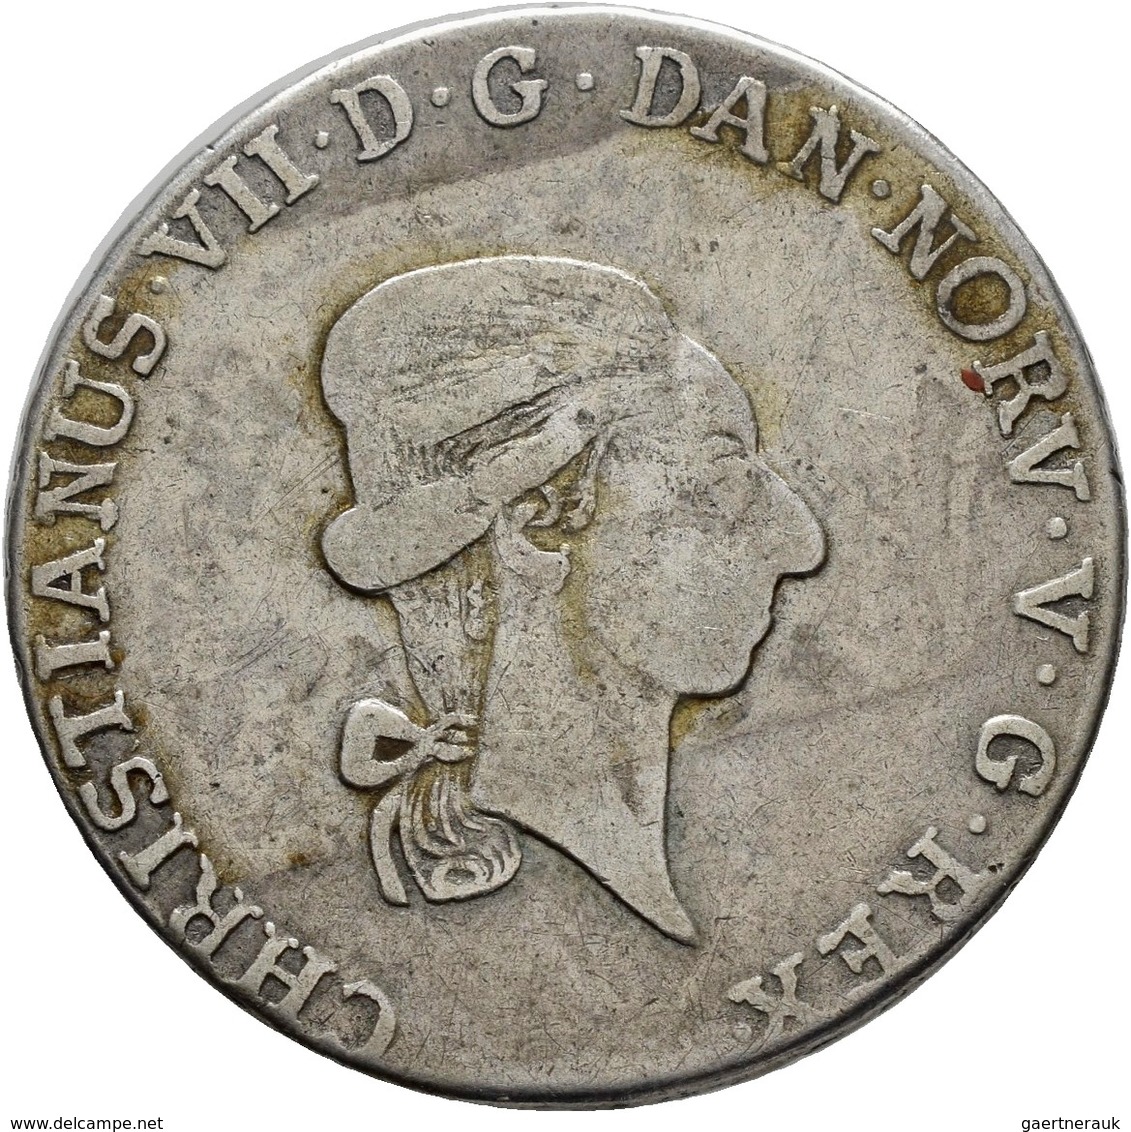 Norwegen: Christian VII. 1766-1808: ½ Speciedaler 1797, Kongsberg, Ahlström 23, Sehr Schön. - Norwegen